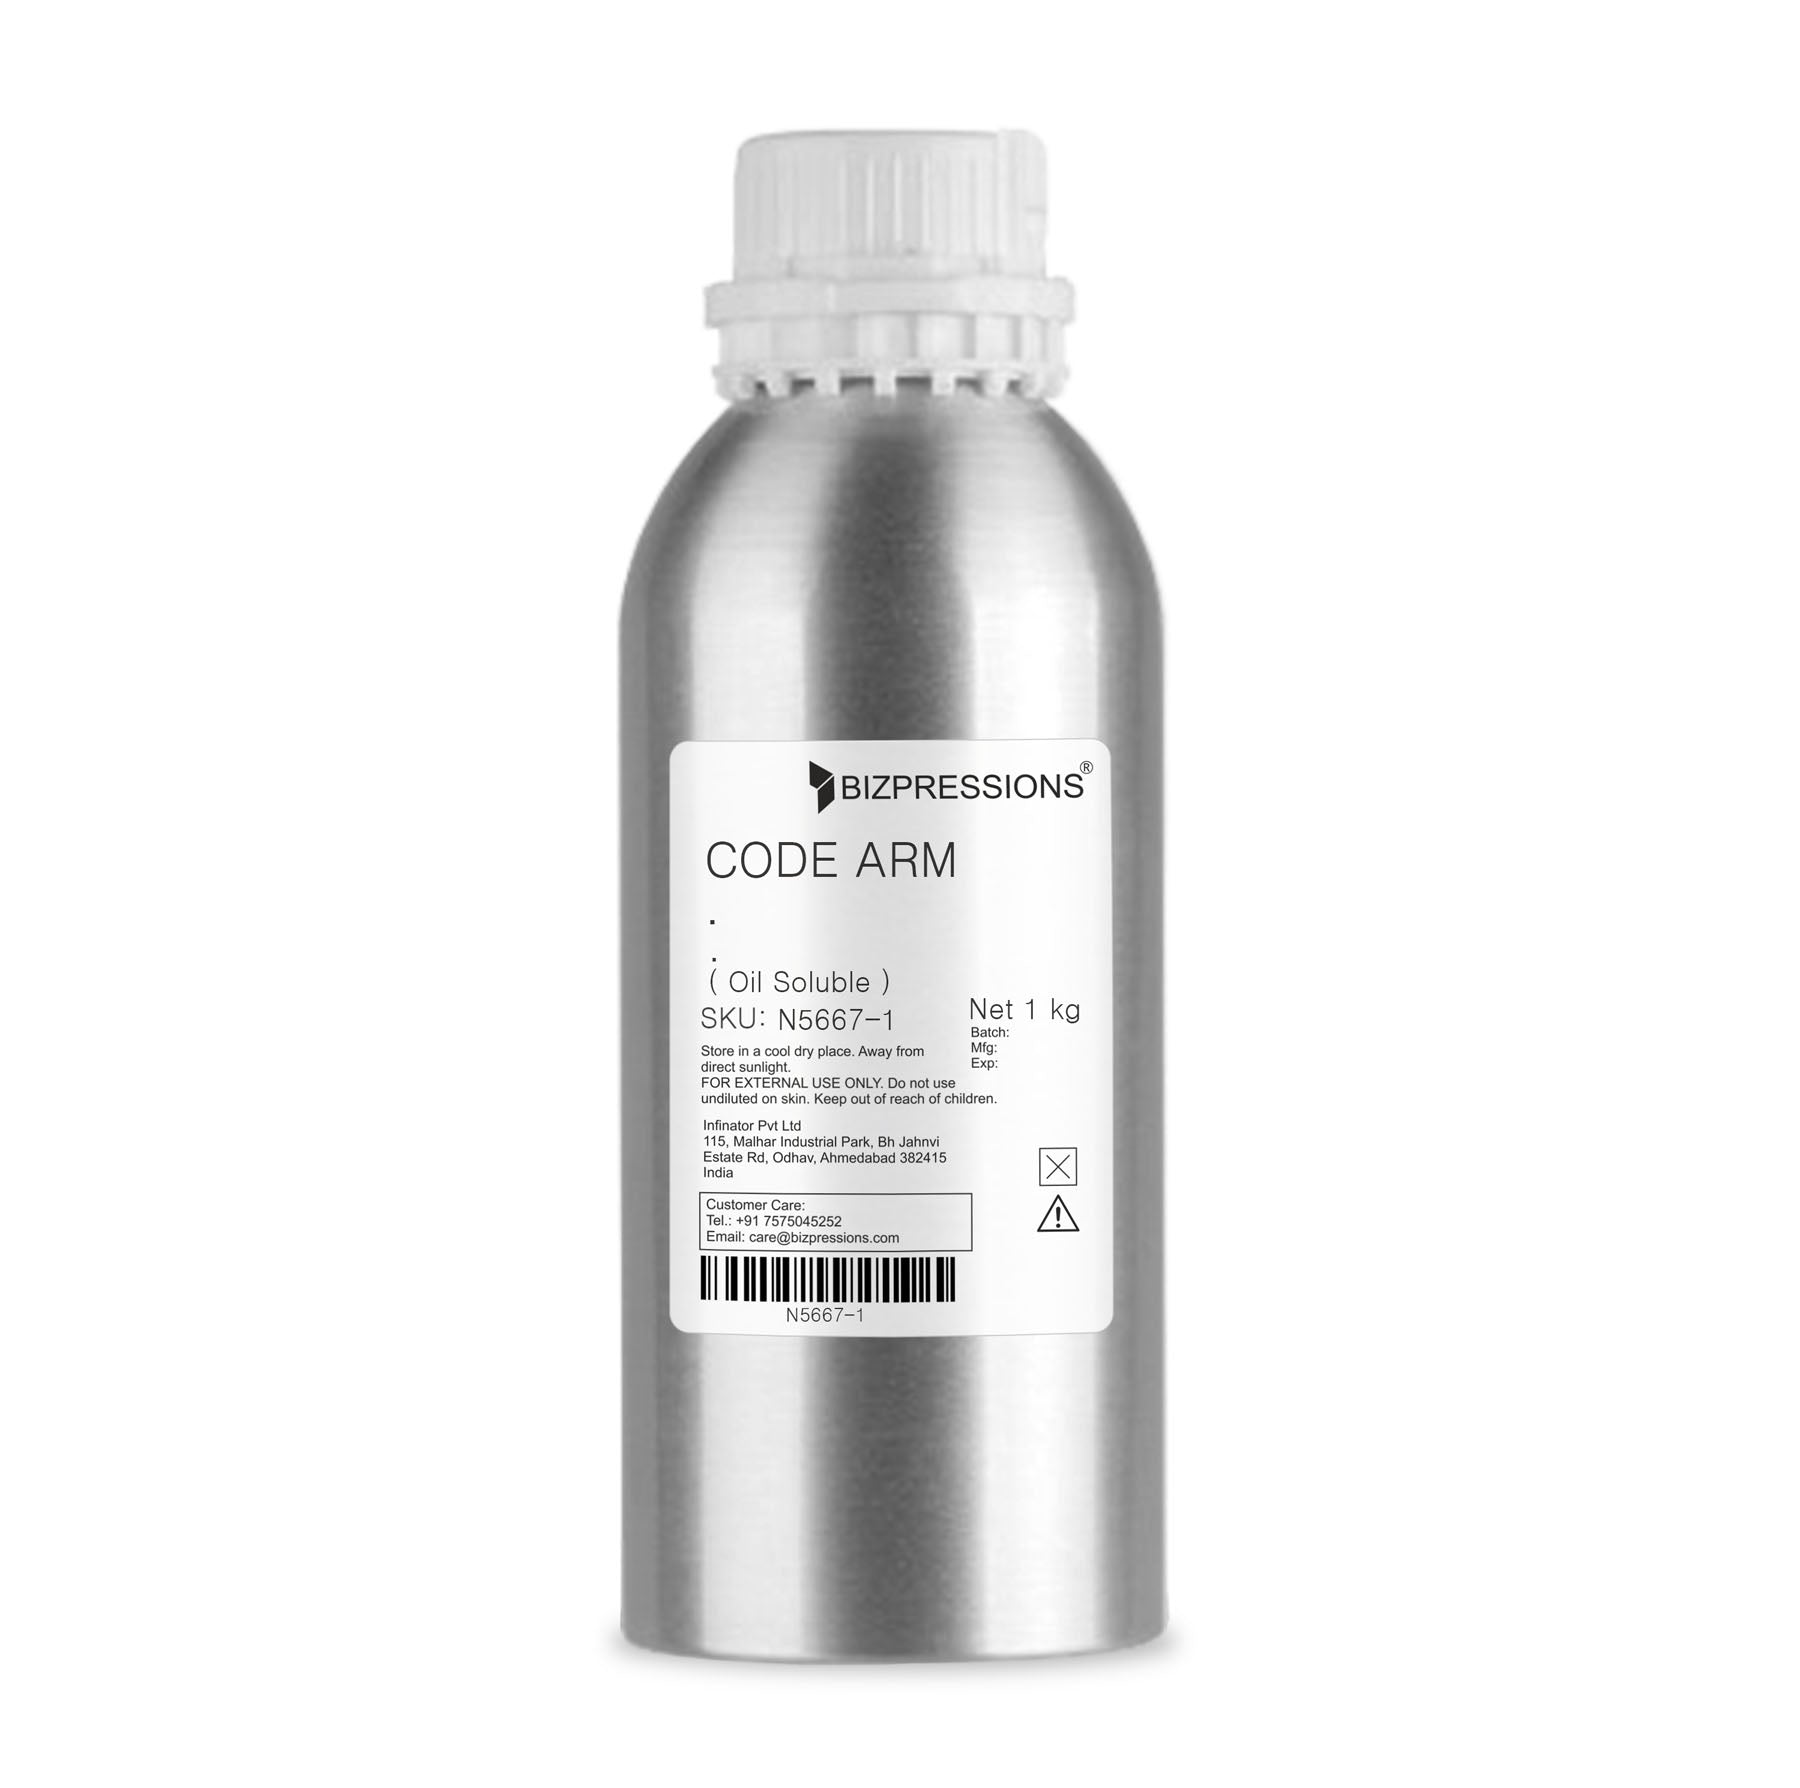 CODE ARM - Fragrance ( Oil Soluble ) - 1 kg